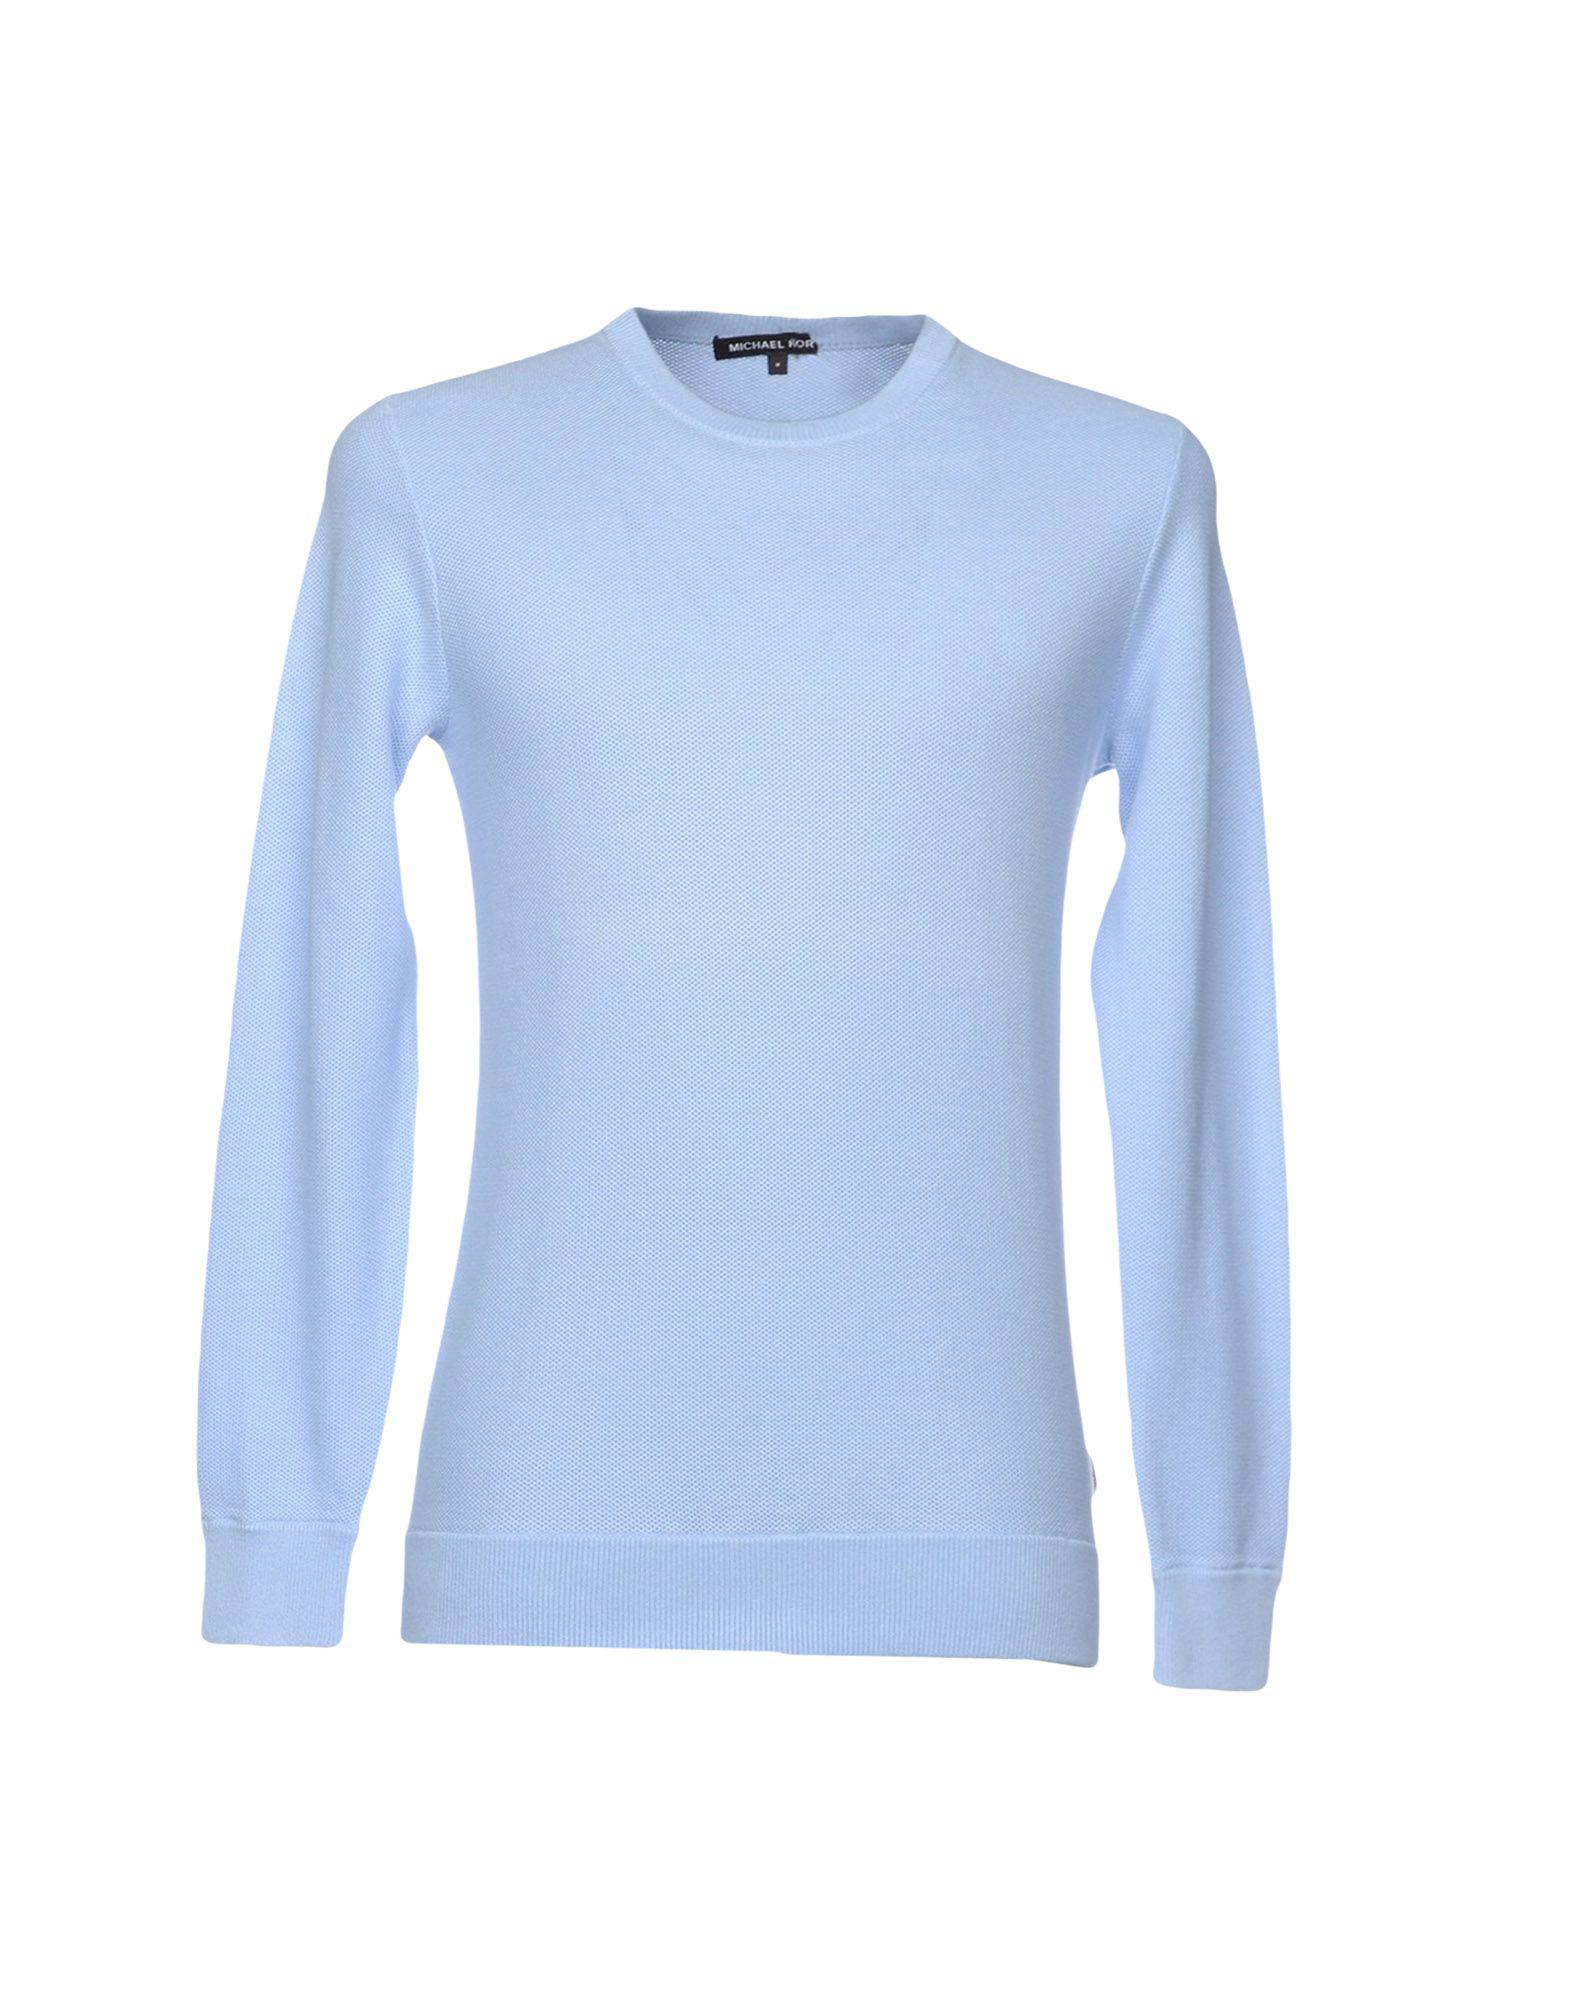 Michael Kors Cotton Sweater in Sky Blue 